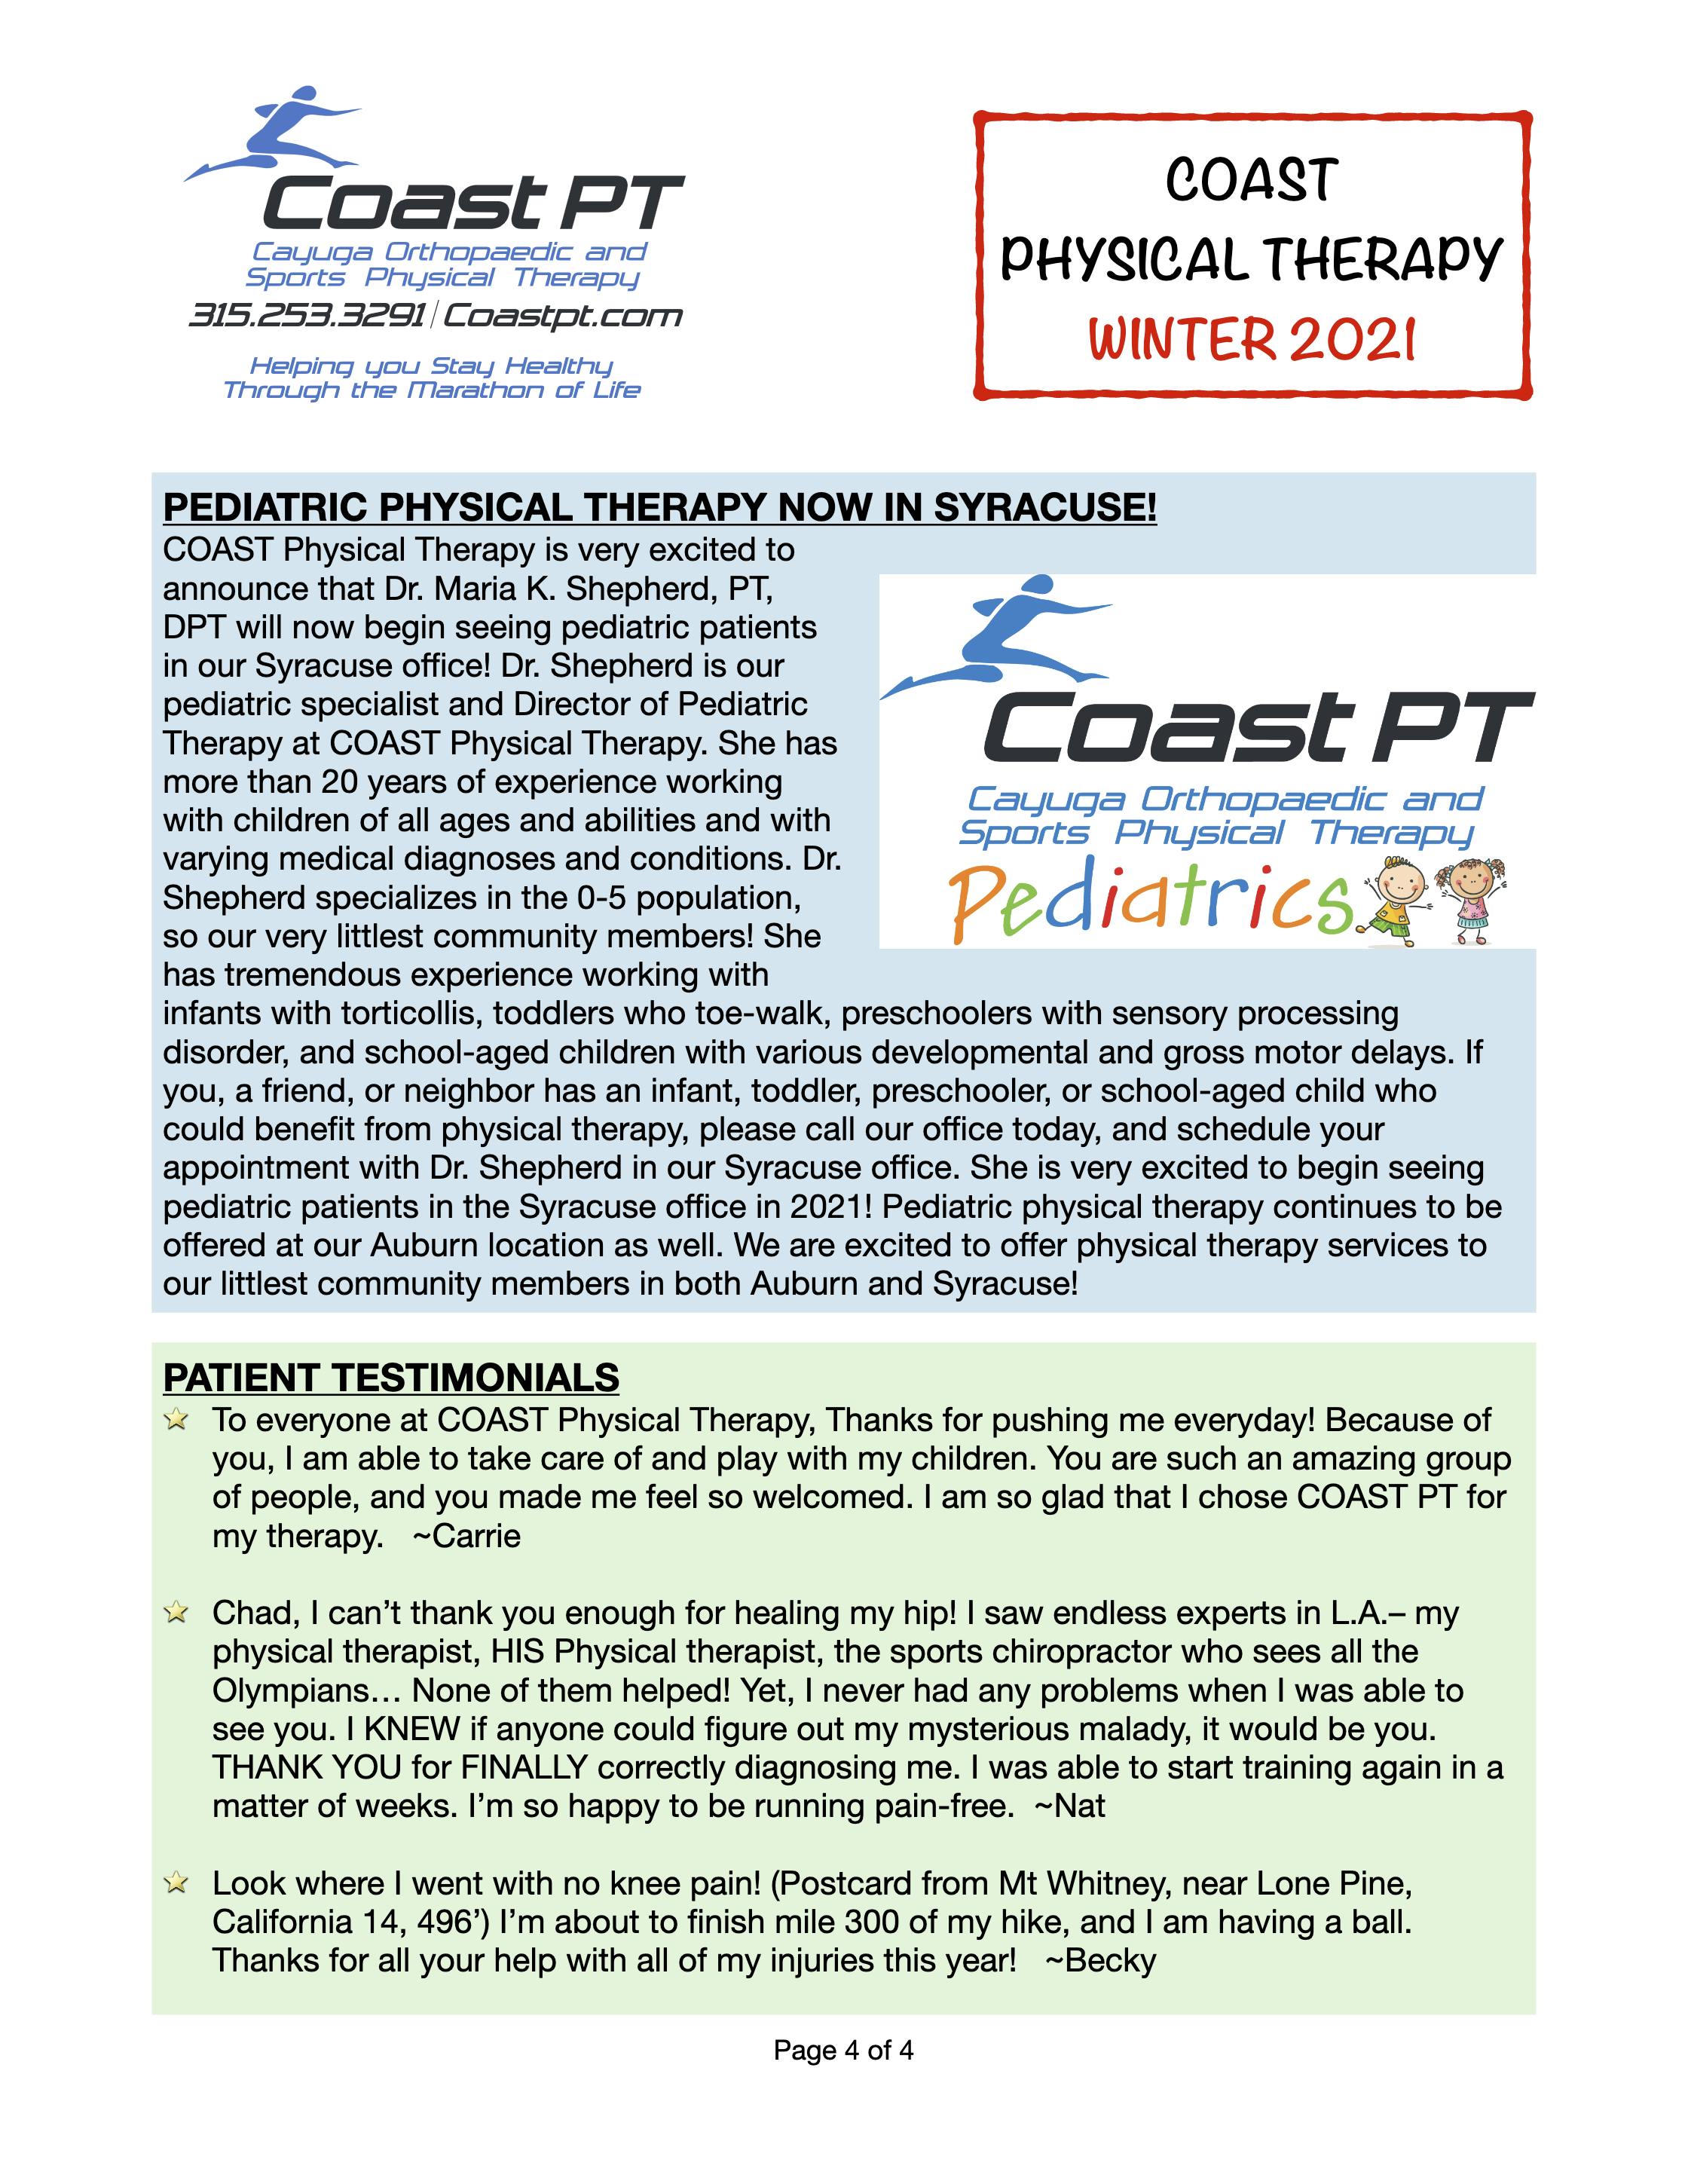 Coast PT Winter Newsletter 2021 p. 4